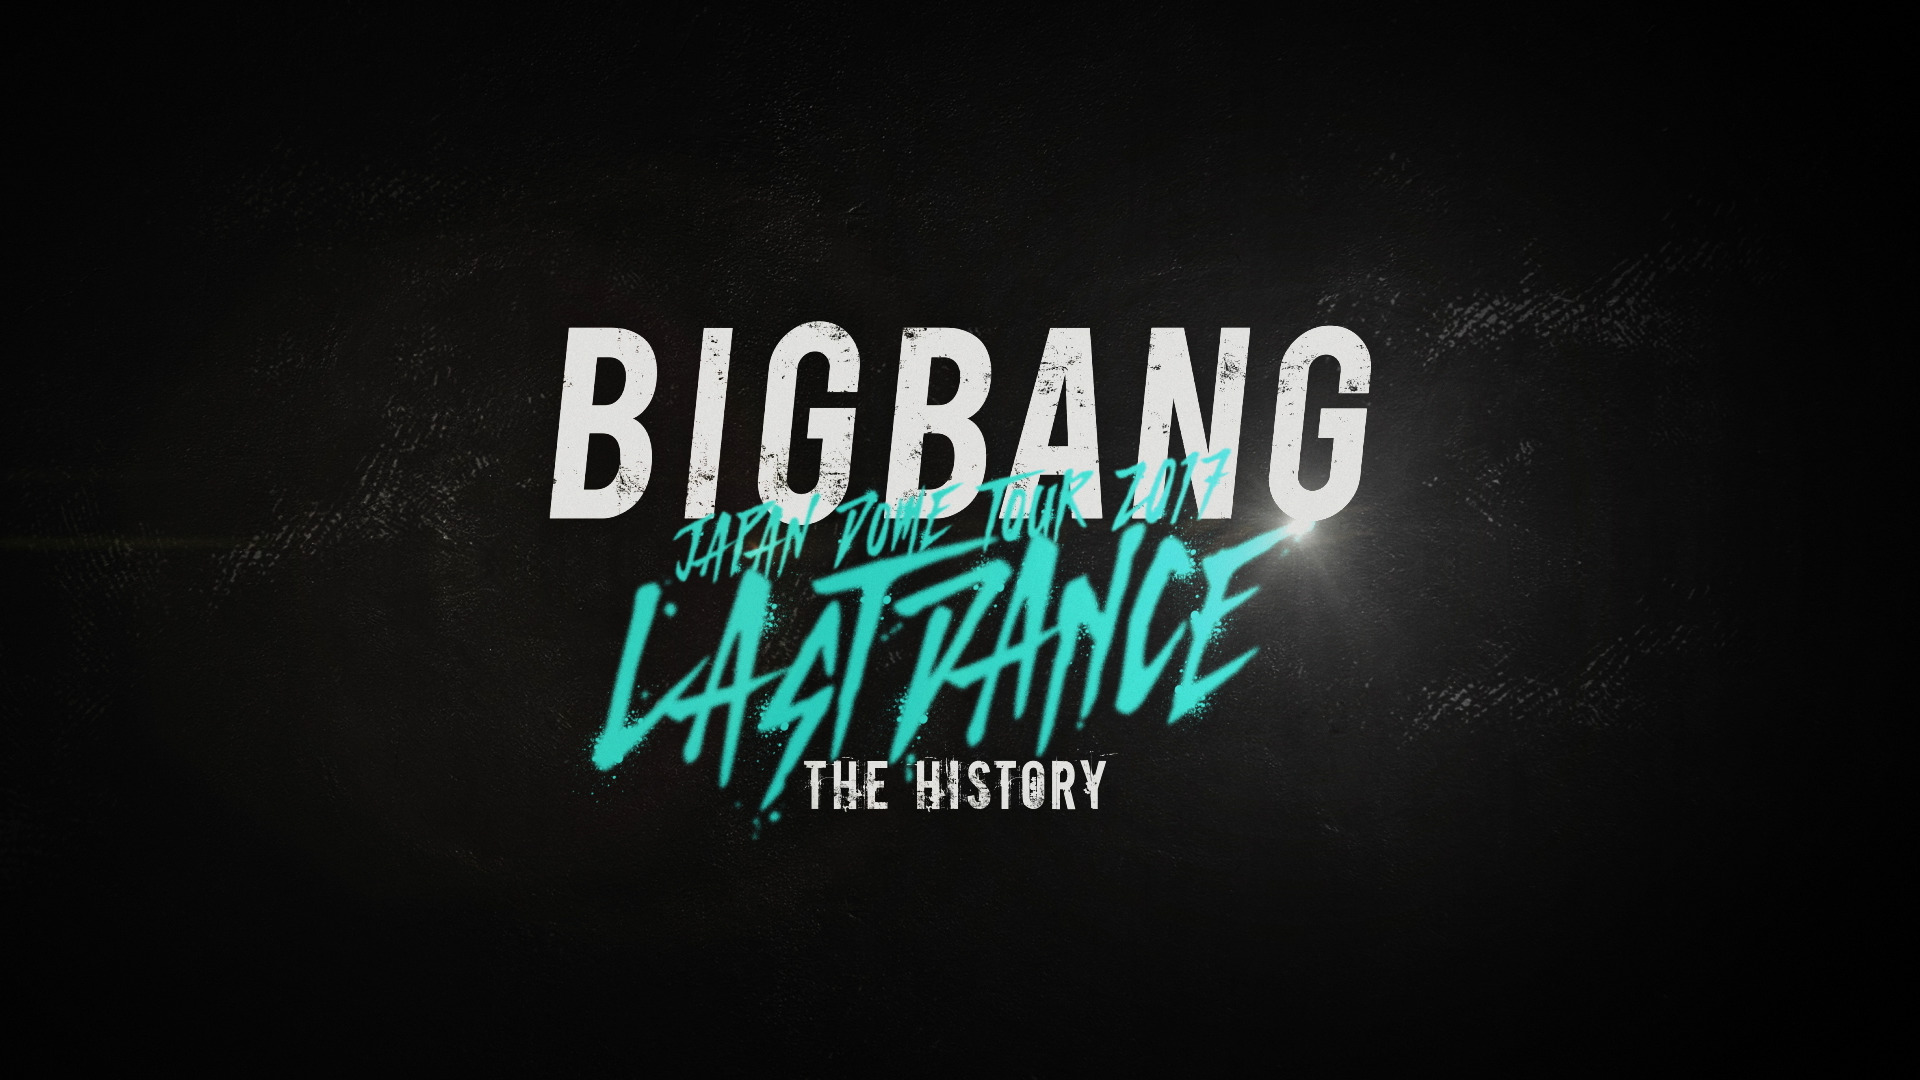 Bigbang Japan Dome Tour 17 Last Dance 株式会社scene シーン 映像制作会社 編集室 撮影技術